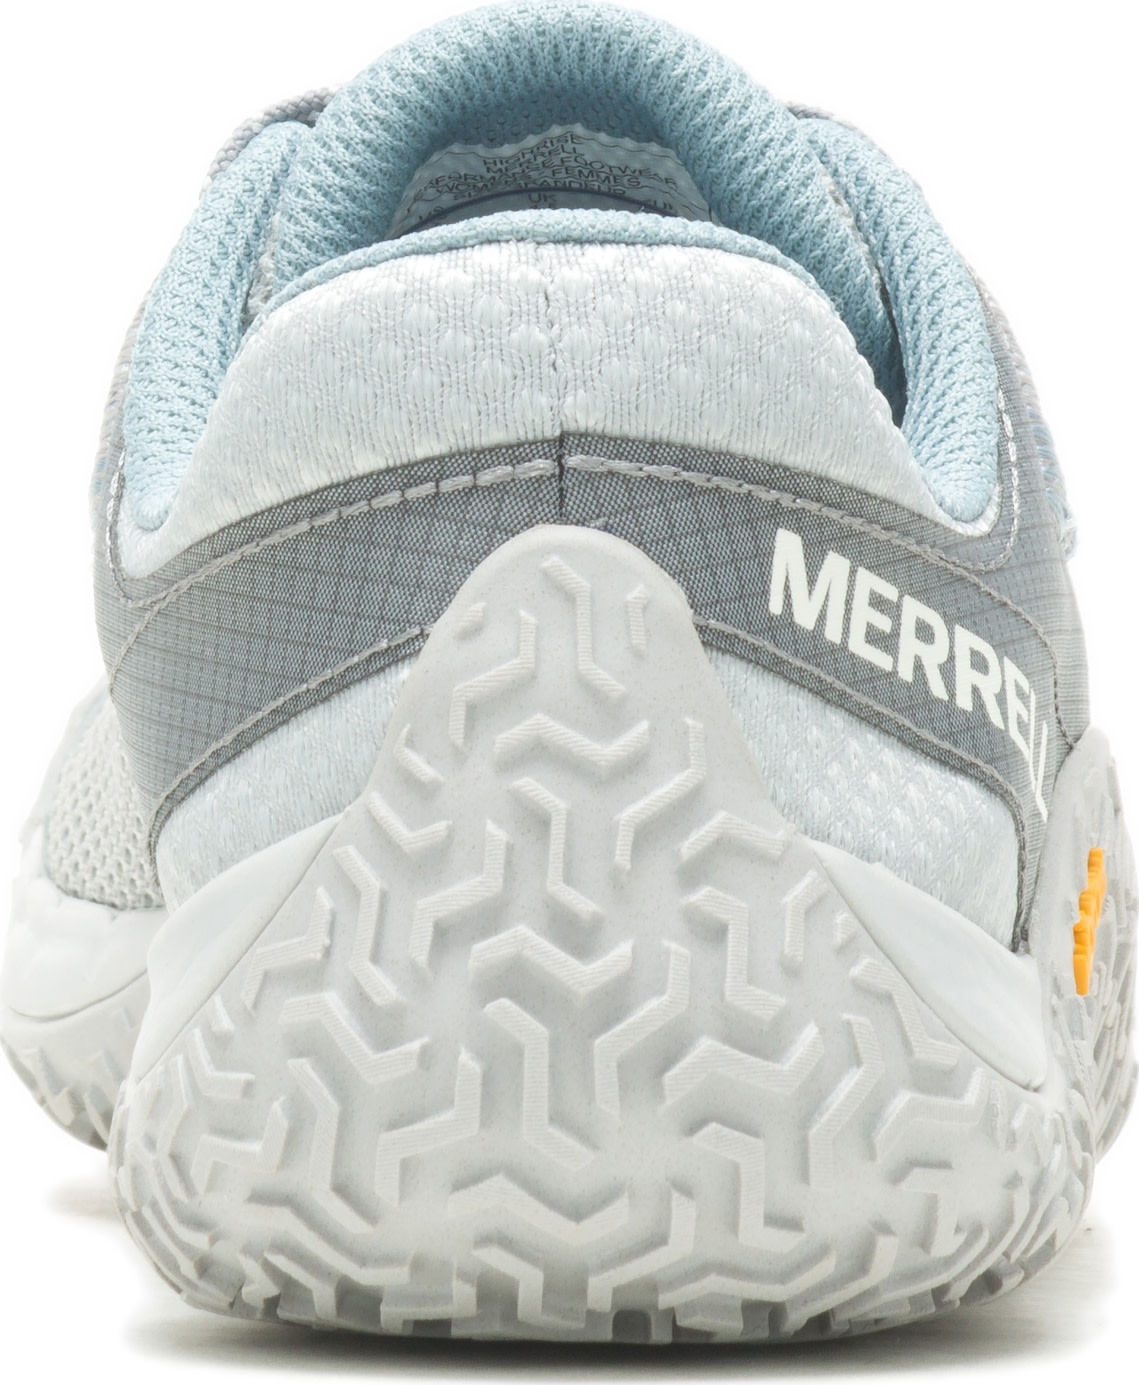 Merrell Women's Trail Glove 7 HIGHRISE | Buy Merrell Women's Trail